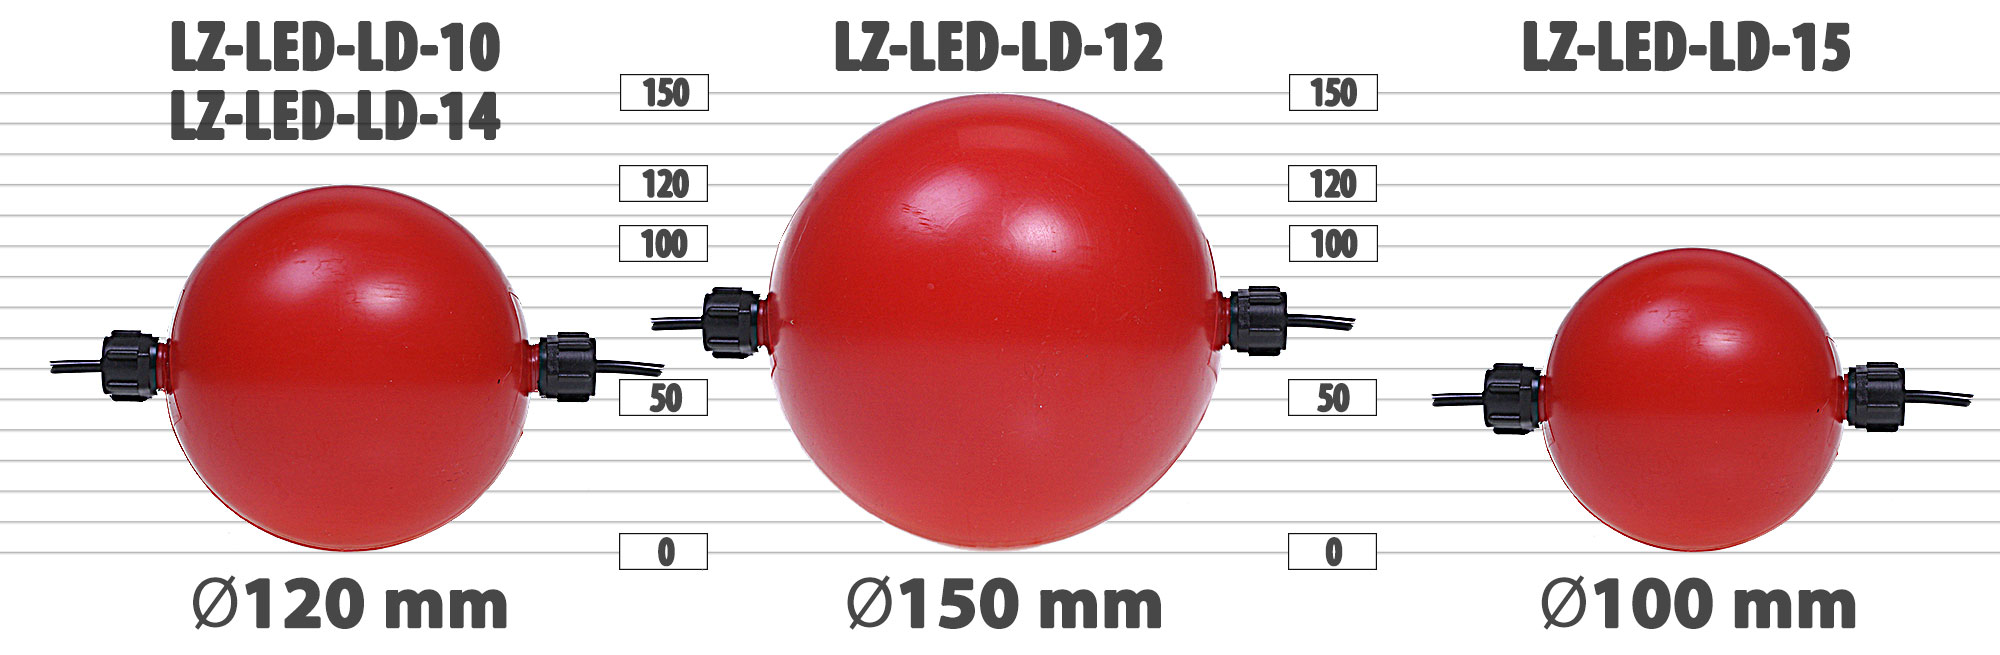 RUM-LUX | LZ-LED-LD-14 | lz-led-ld-14_[f007].jpg